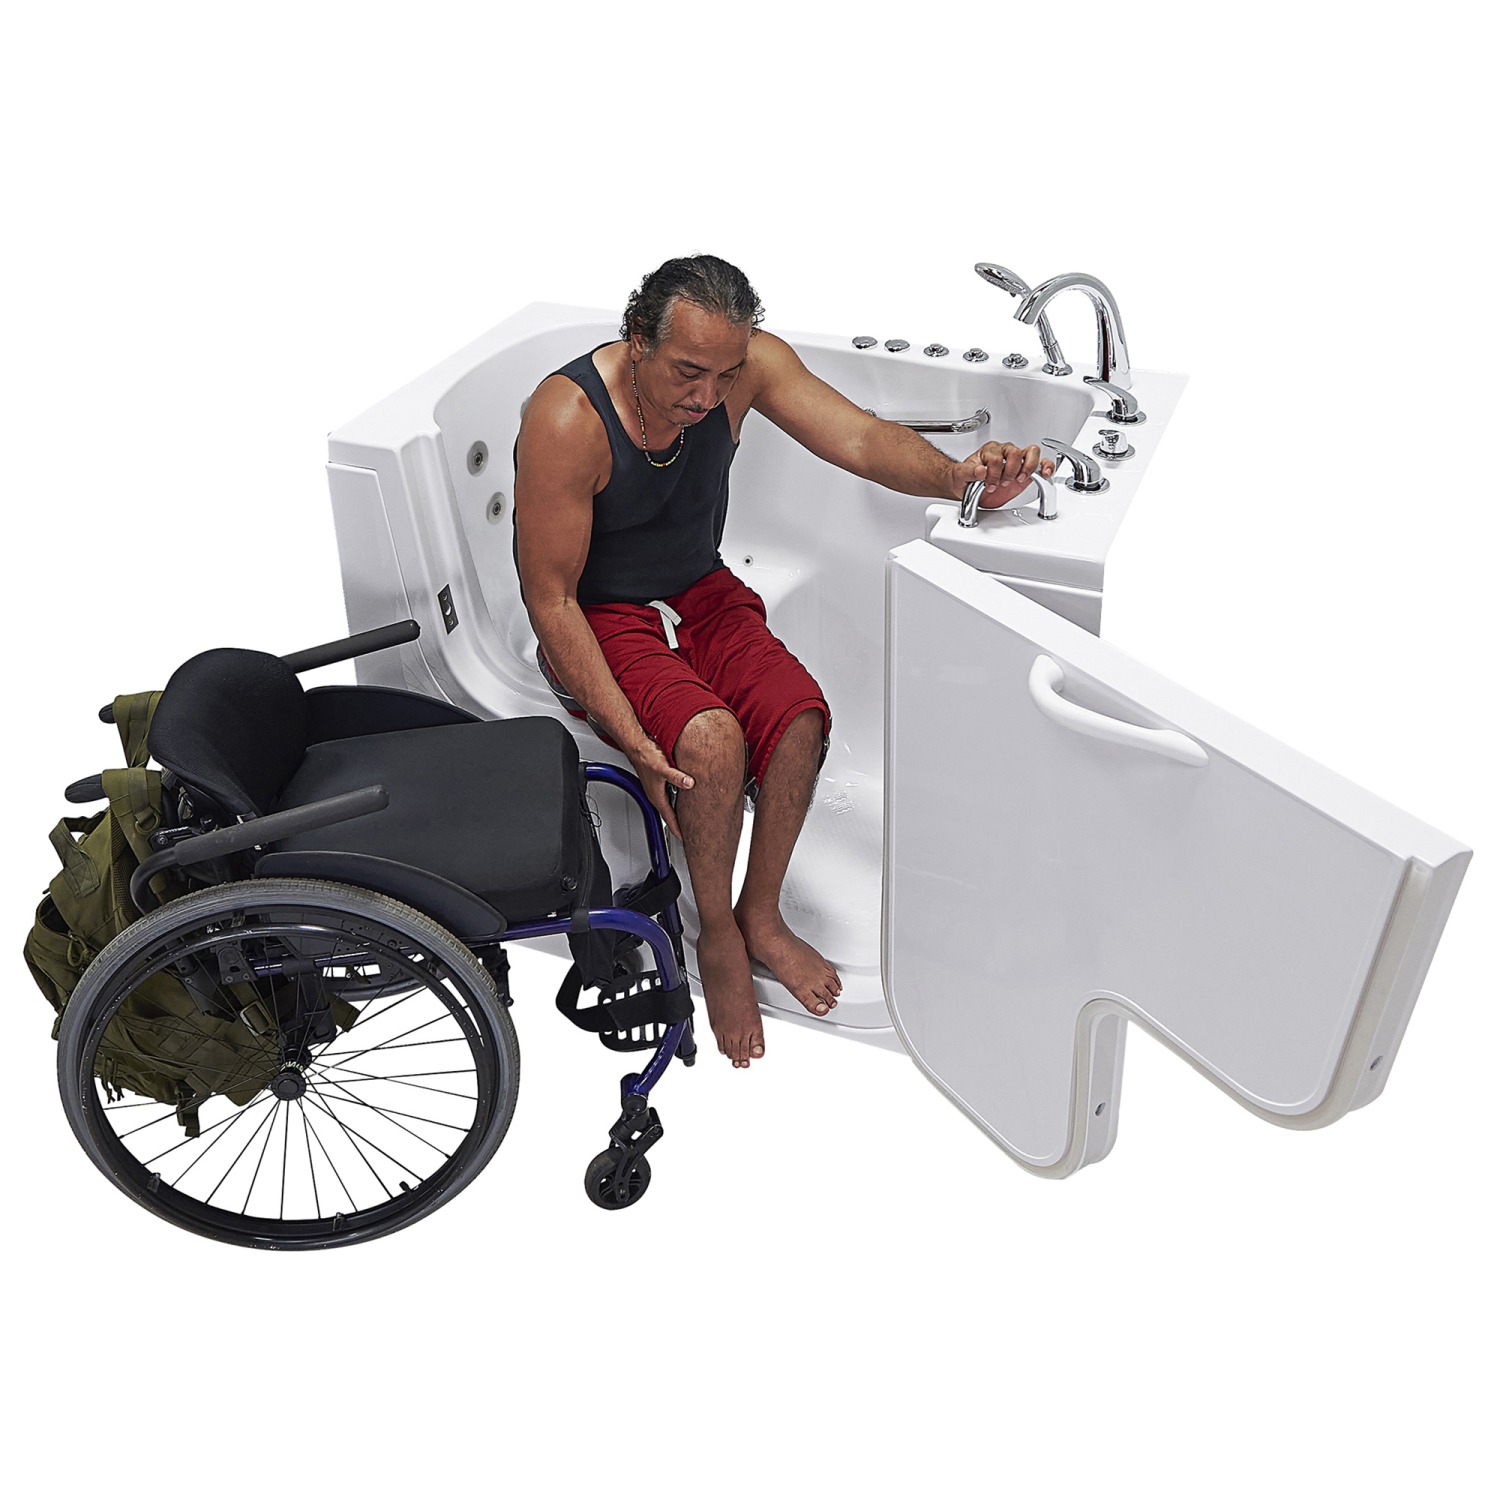 Transfer60 Bañera acrílica con puerta hacia afuera accesible en silla de ruedas - 30″an X 60″l (76cm X 152cm)